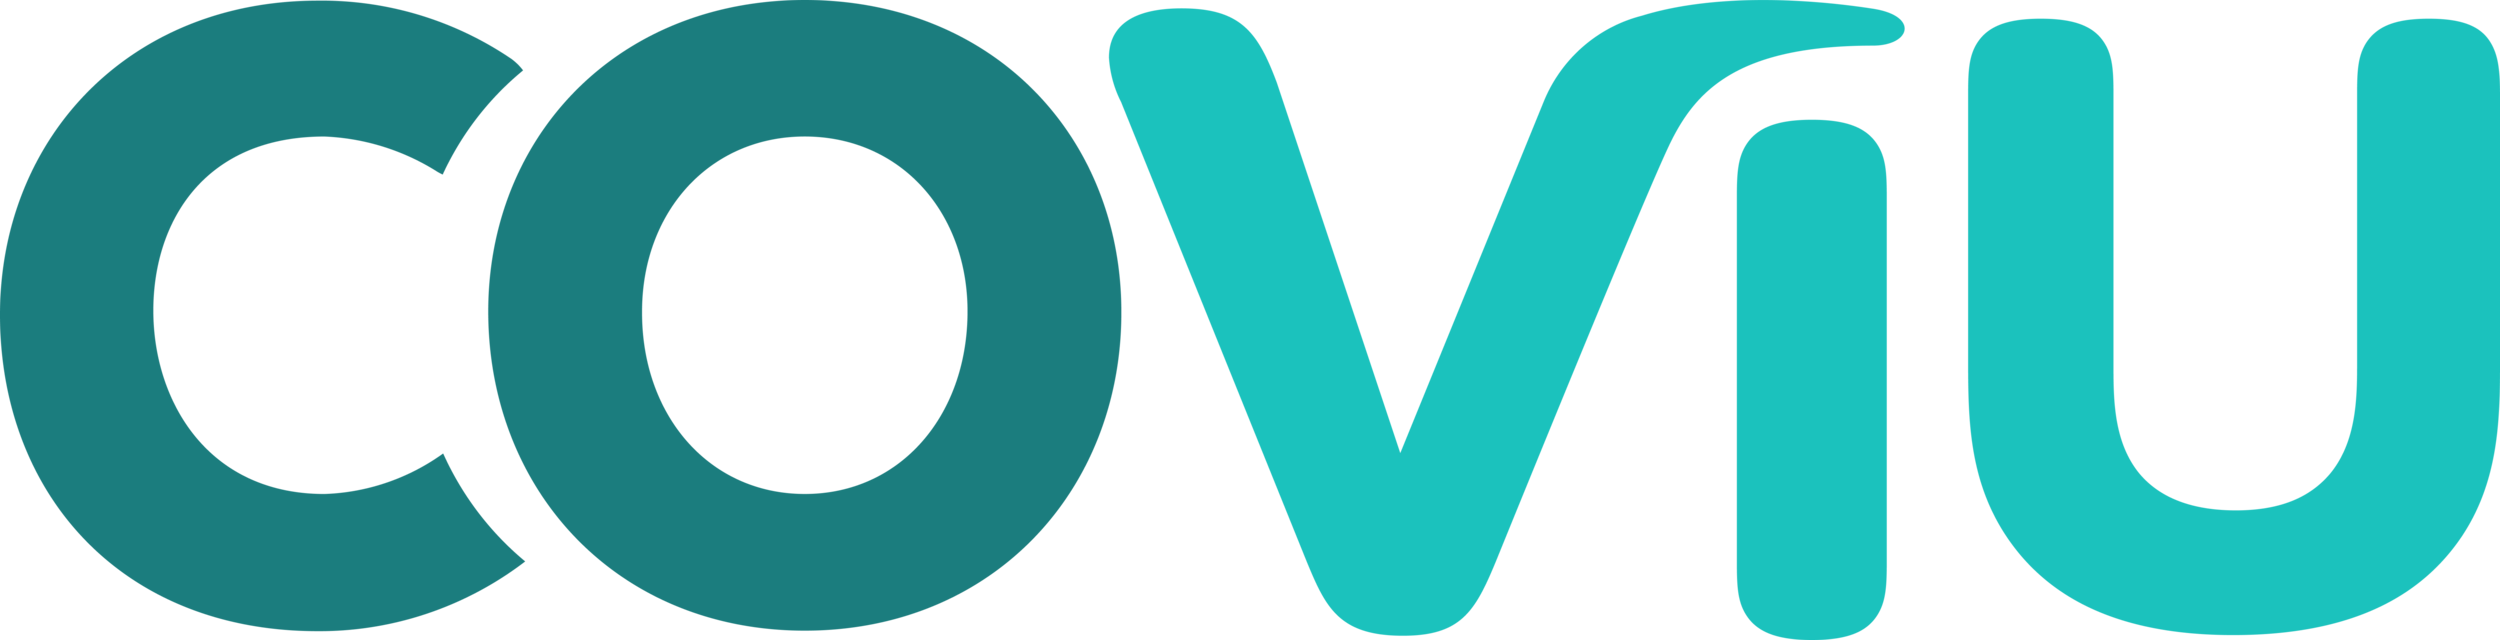 Coviu Logo.png